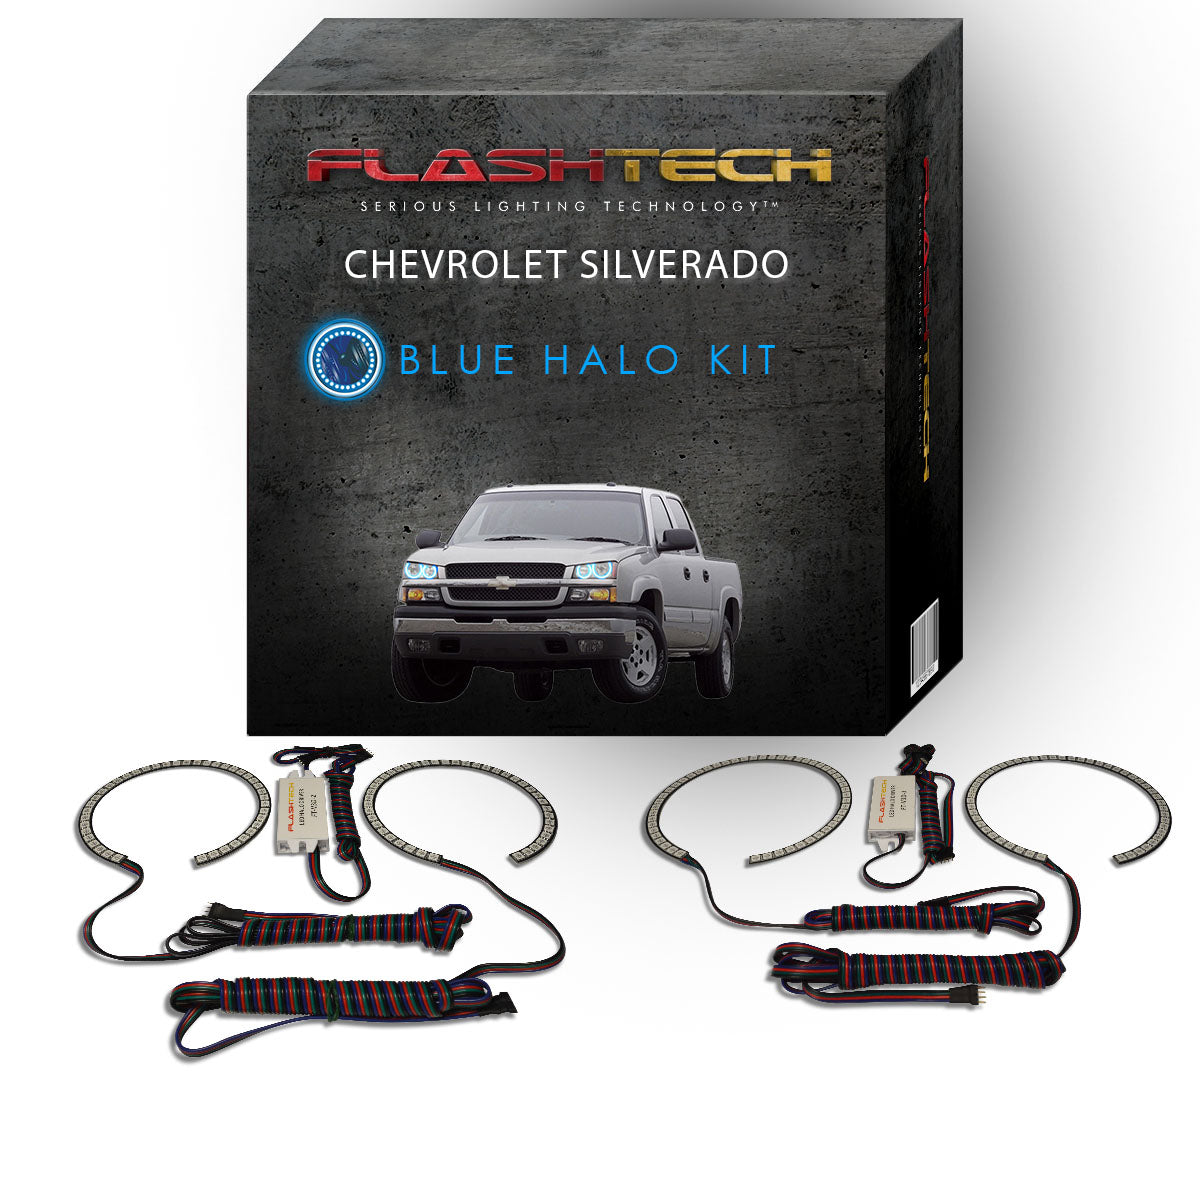 Chevrolet-Silverado-2003, 2004, 2005, 2006-LED-Halo-Headlights-RGB-No Remote-CY-SV0306-V3H